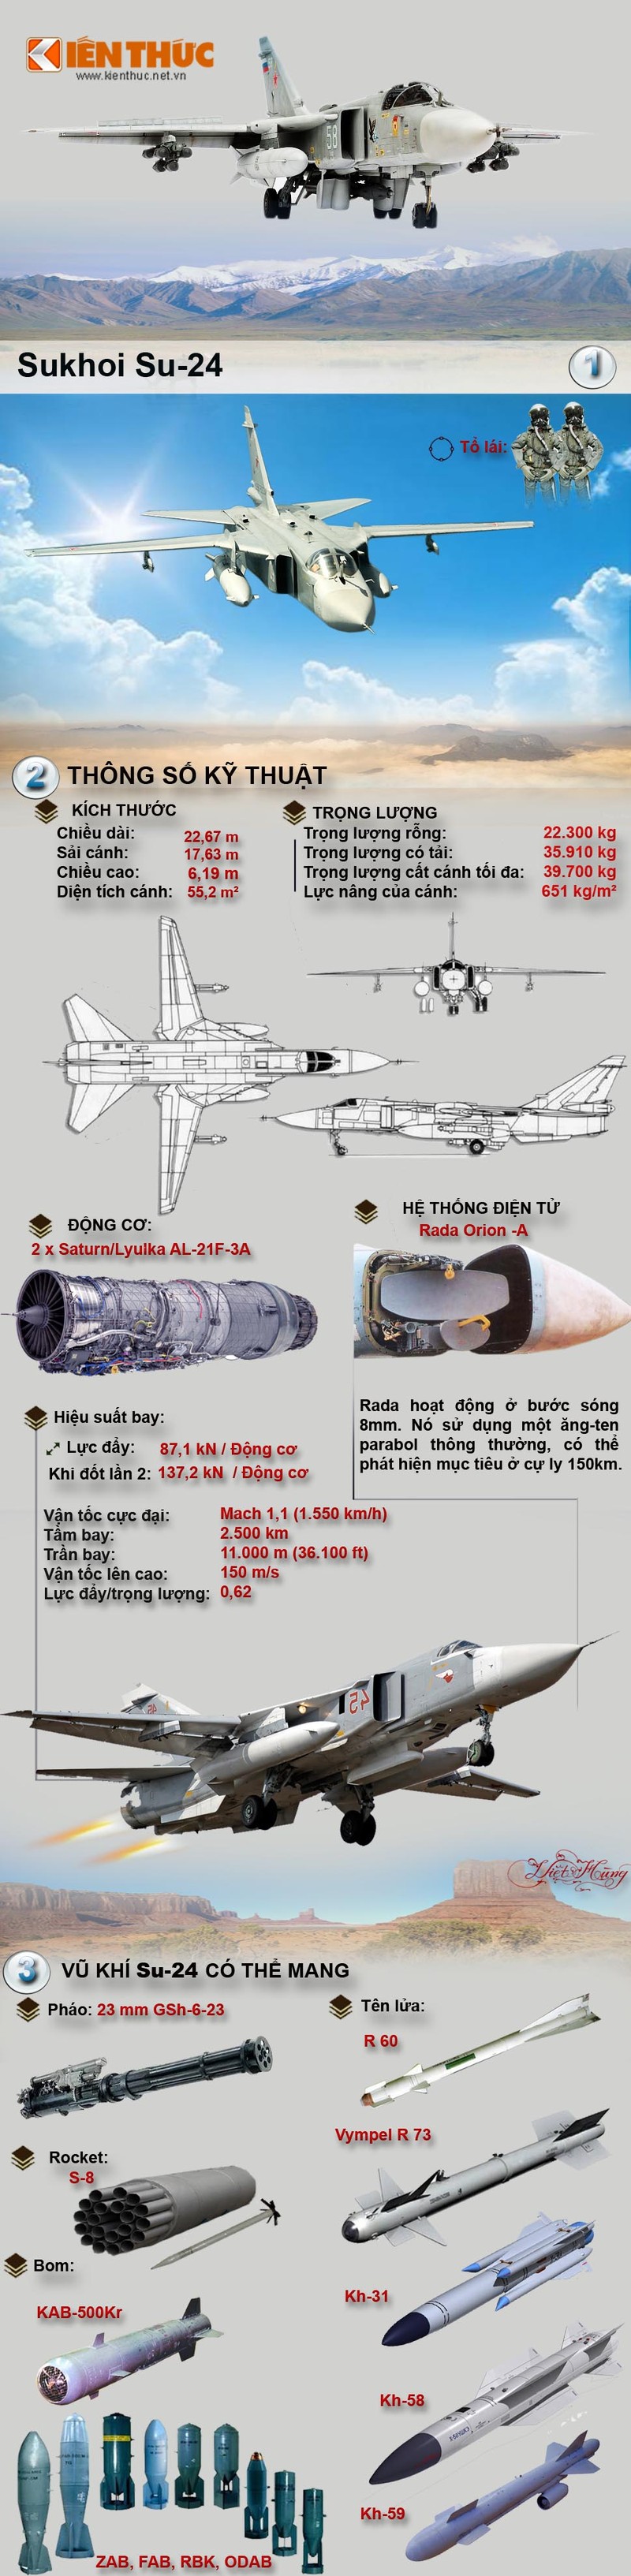 Infographic: May bay Sukhoi Su-24 Nga bi TNK ban roi